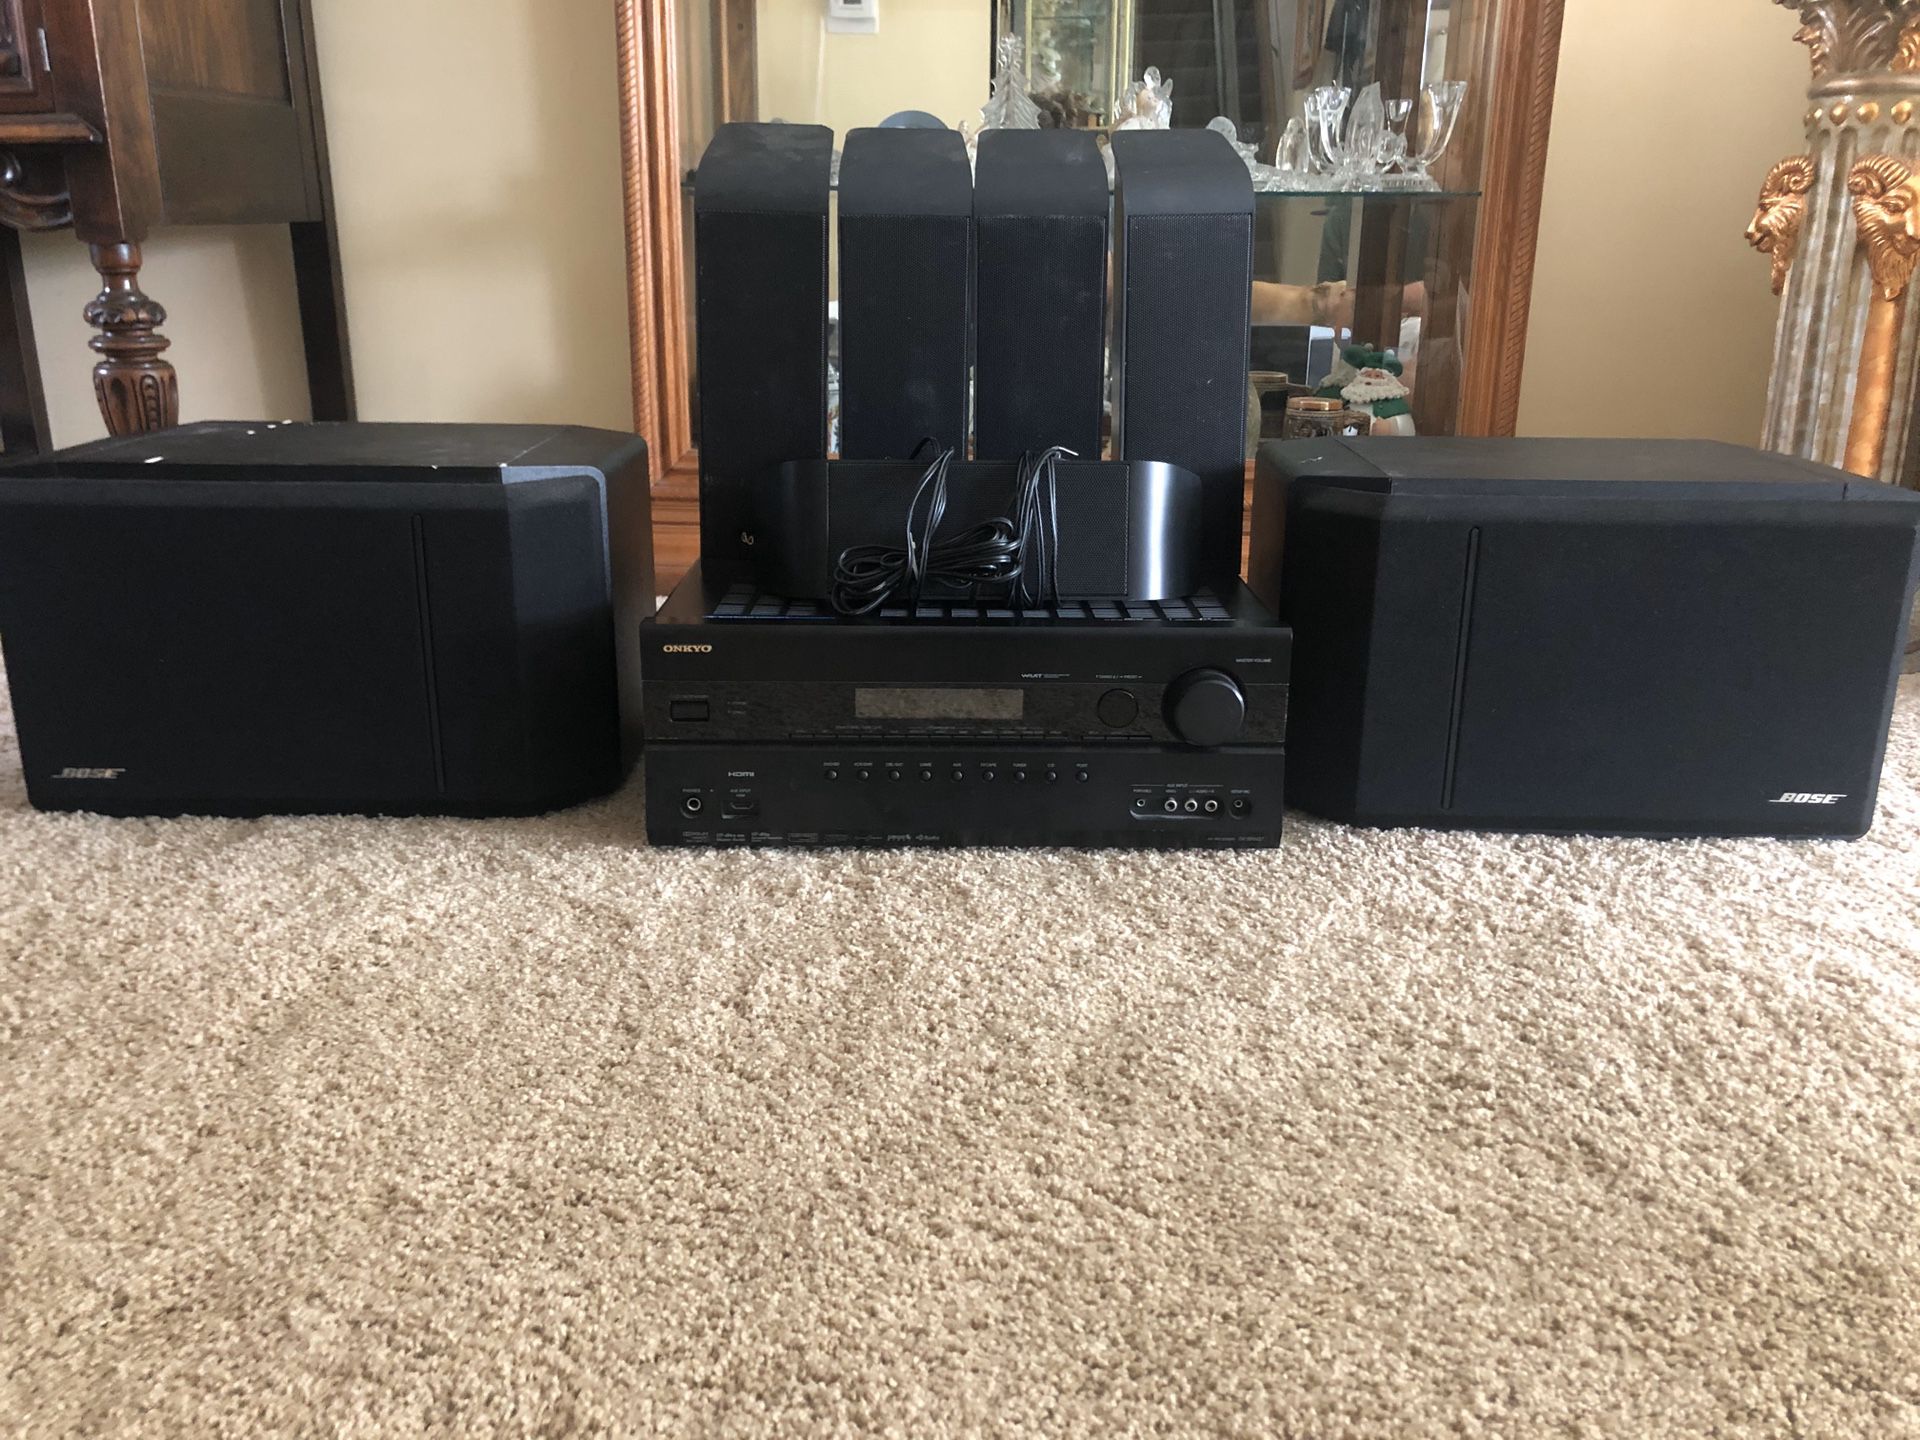 Bose/infinity surround sound speakers